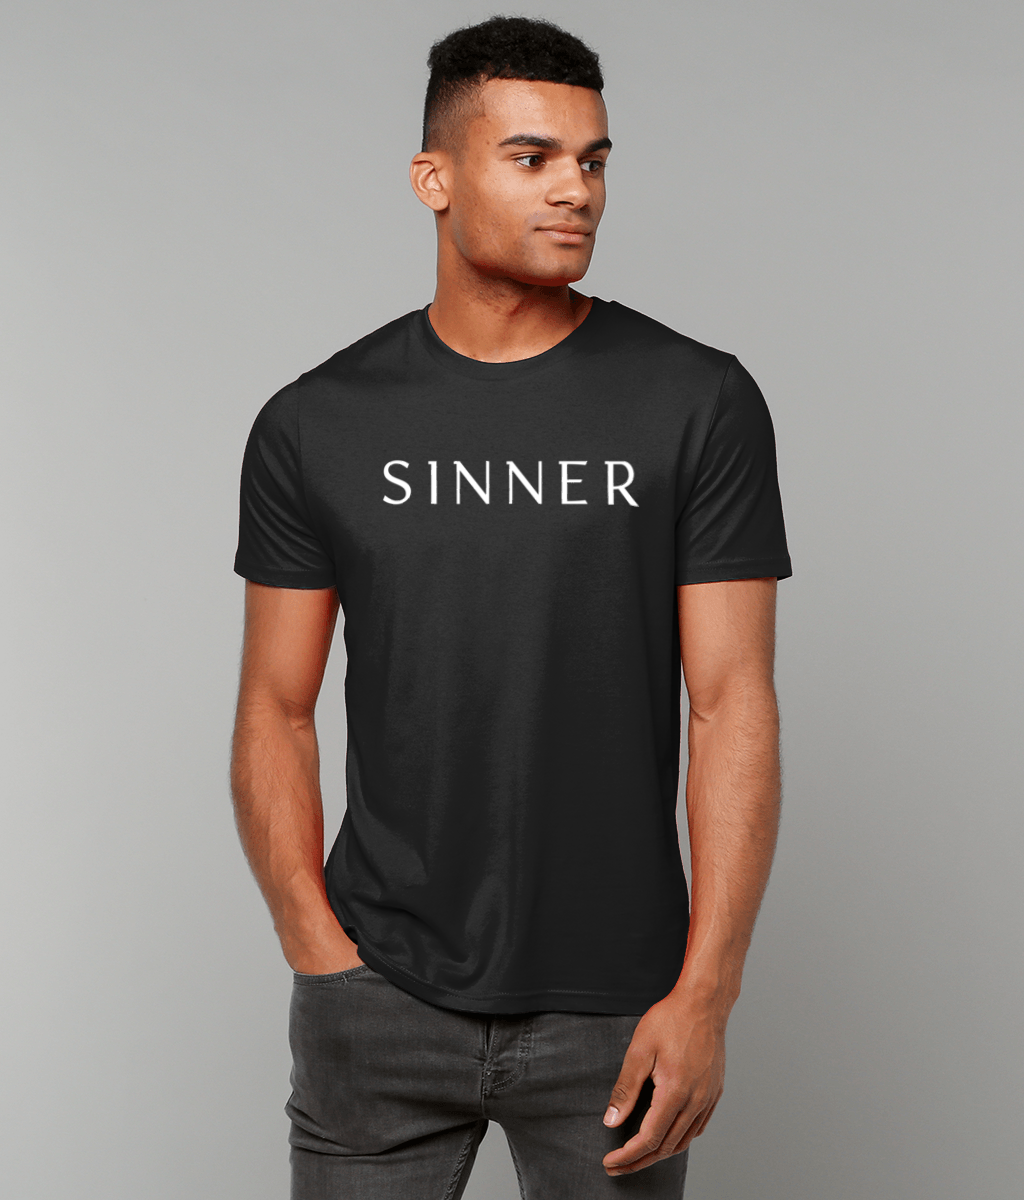 T-shirt For Sinners